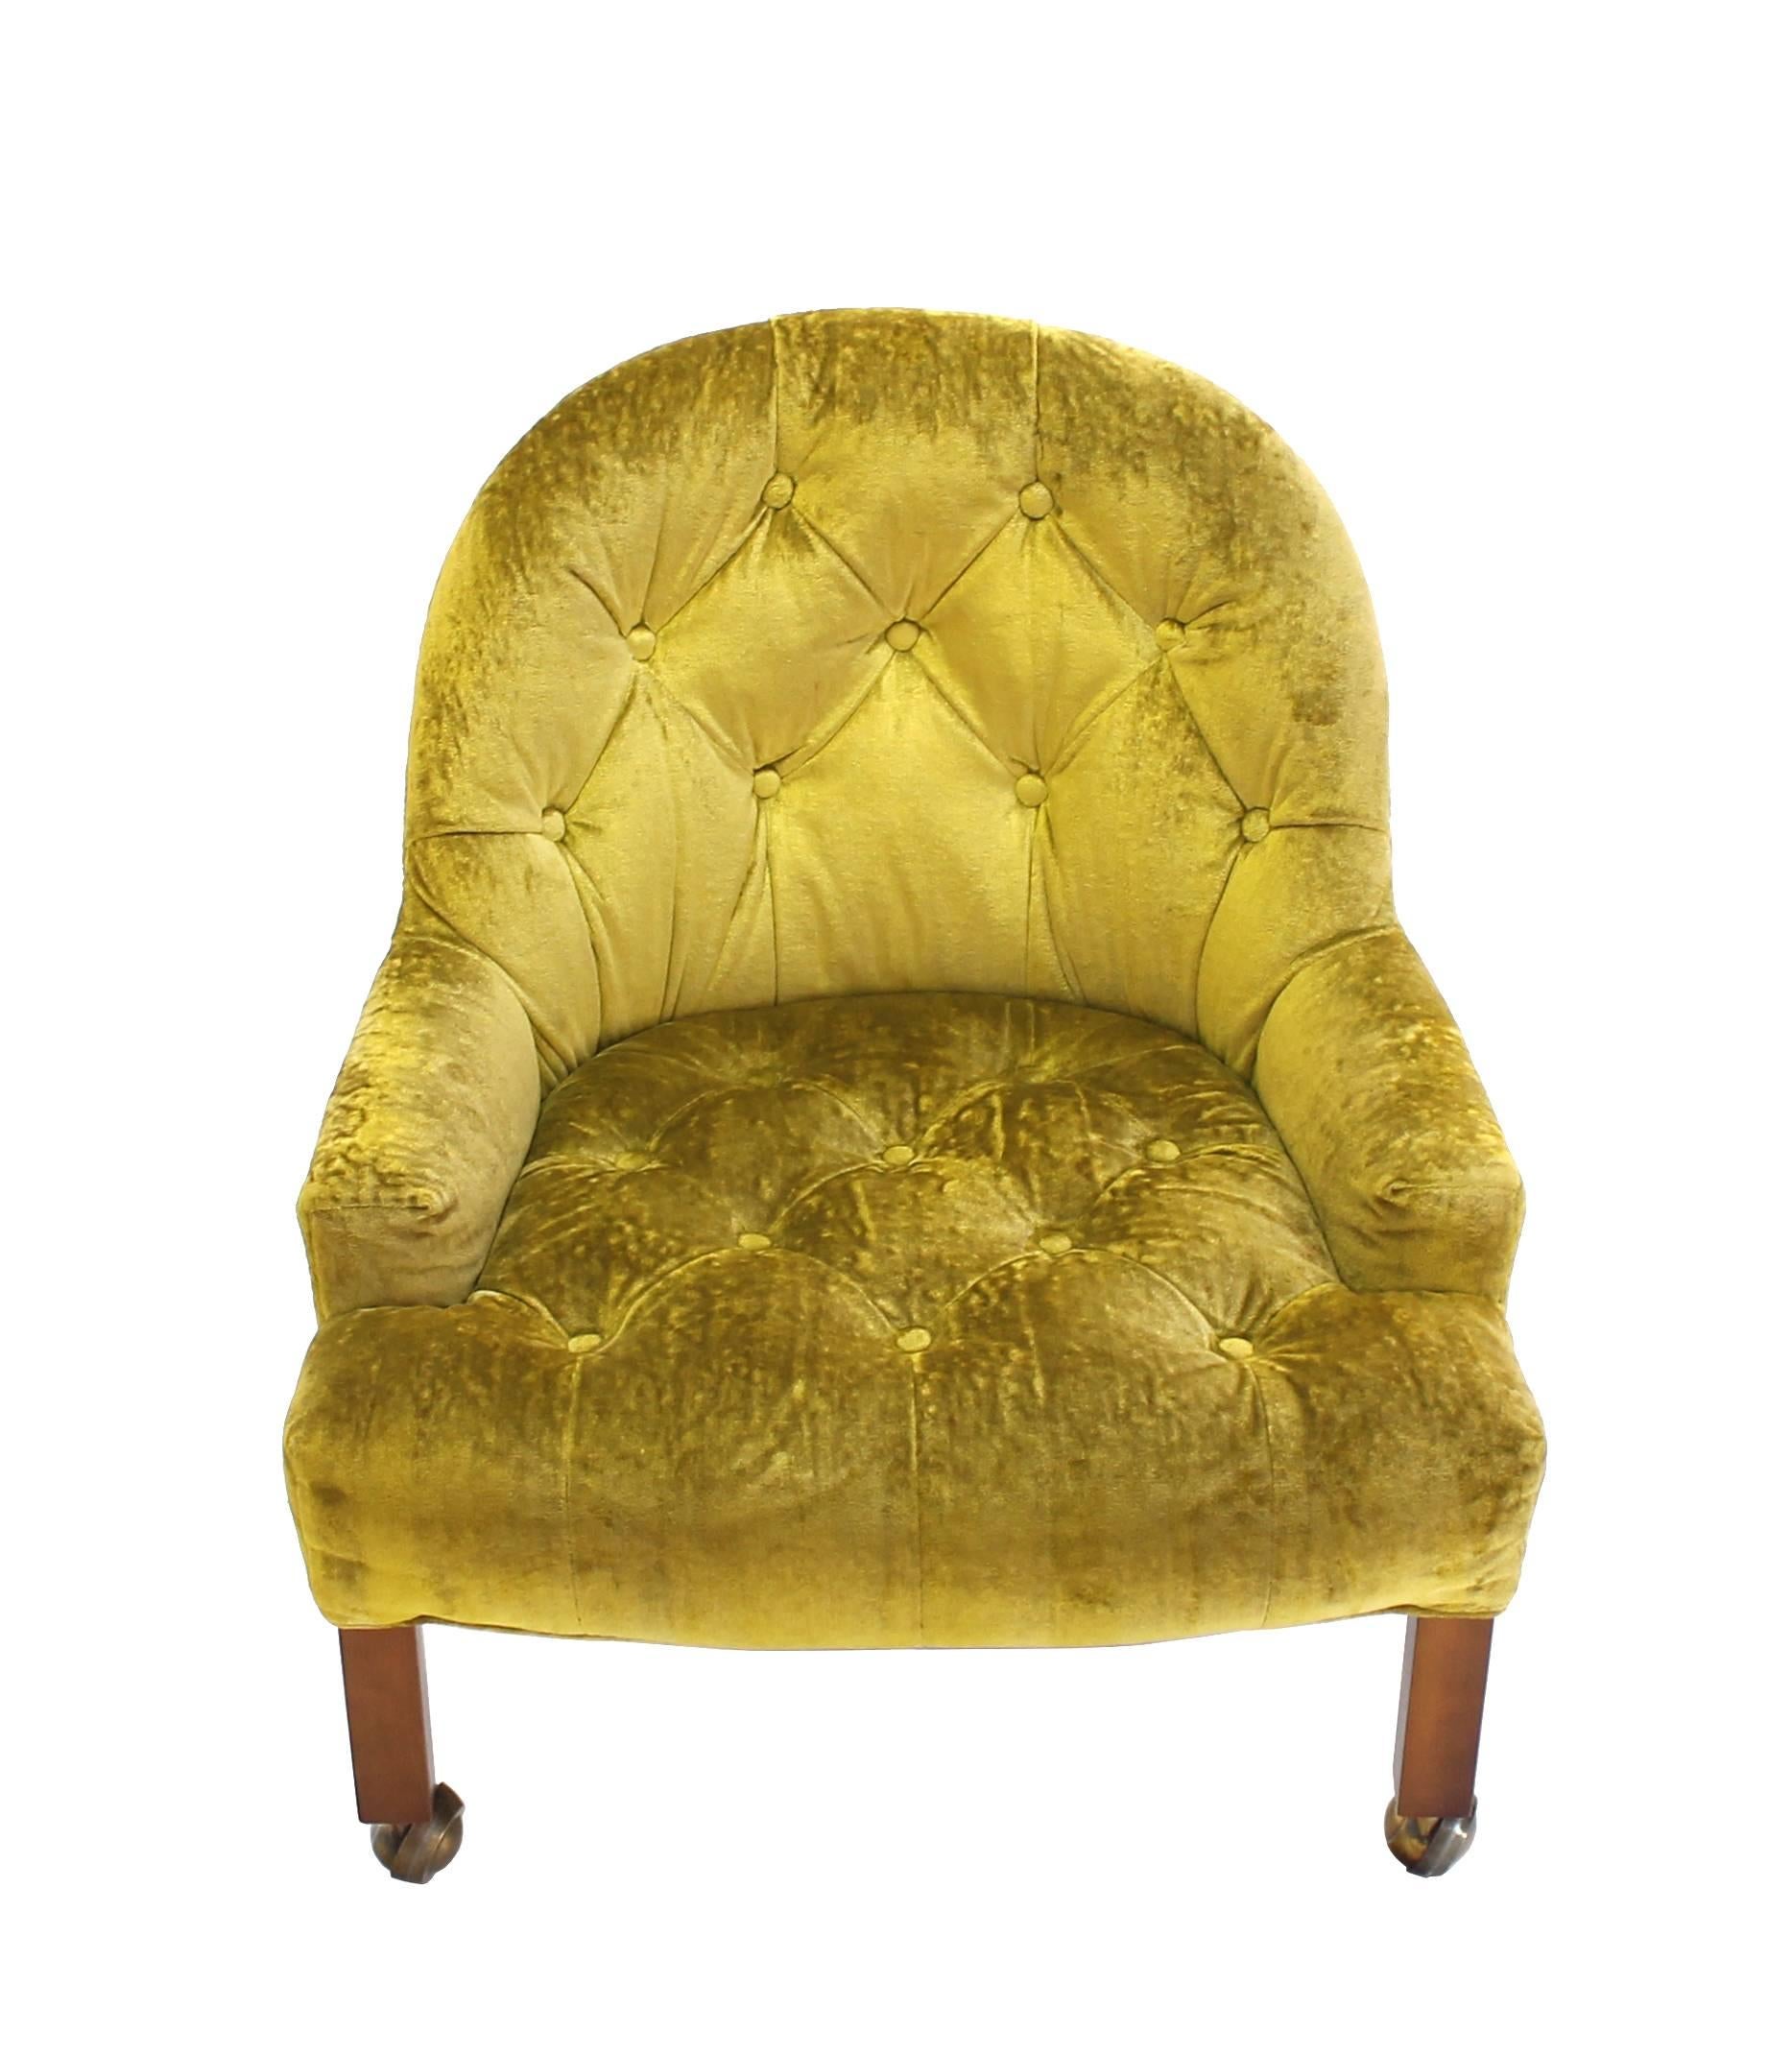 20th Century Pair of Gold Tufted Velvet Upholstery Vintage Barrel Back Slipper Lounge Chairs